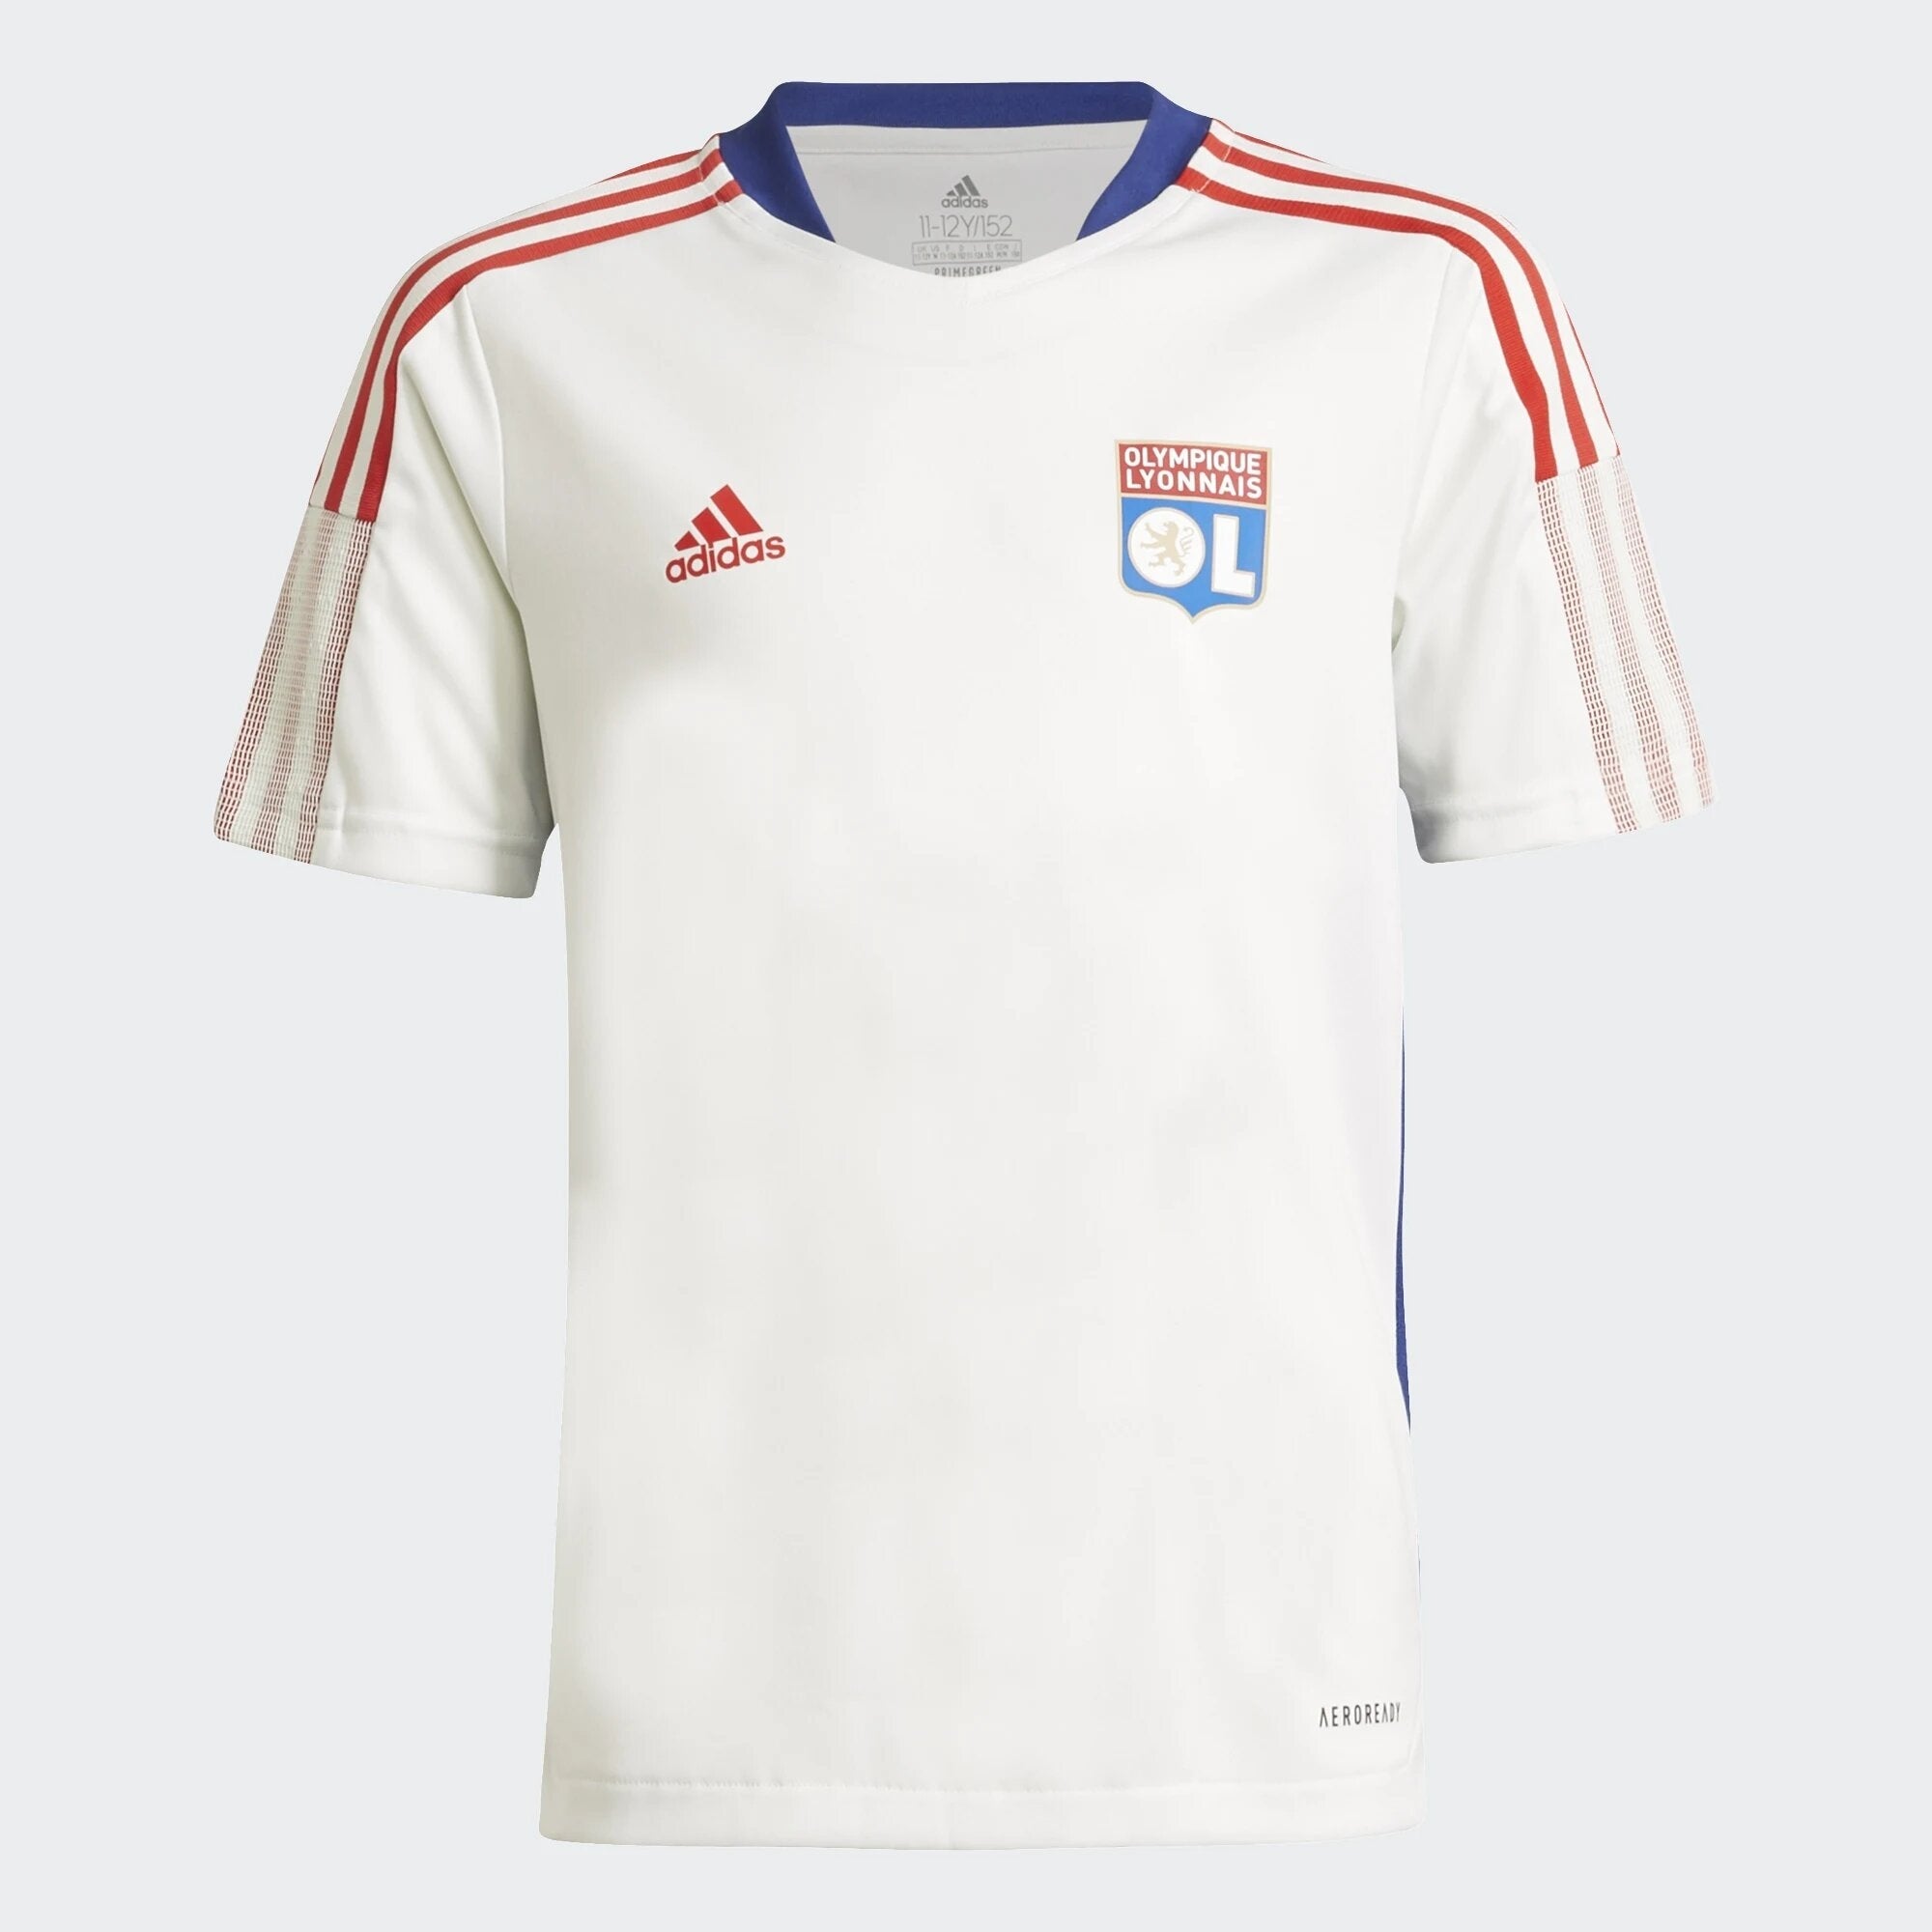 OL Junior training shirt 2021/2022 - White/Red